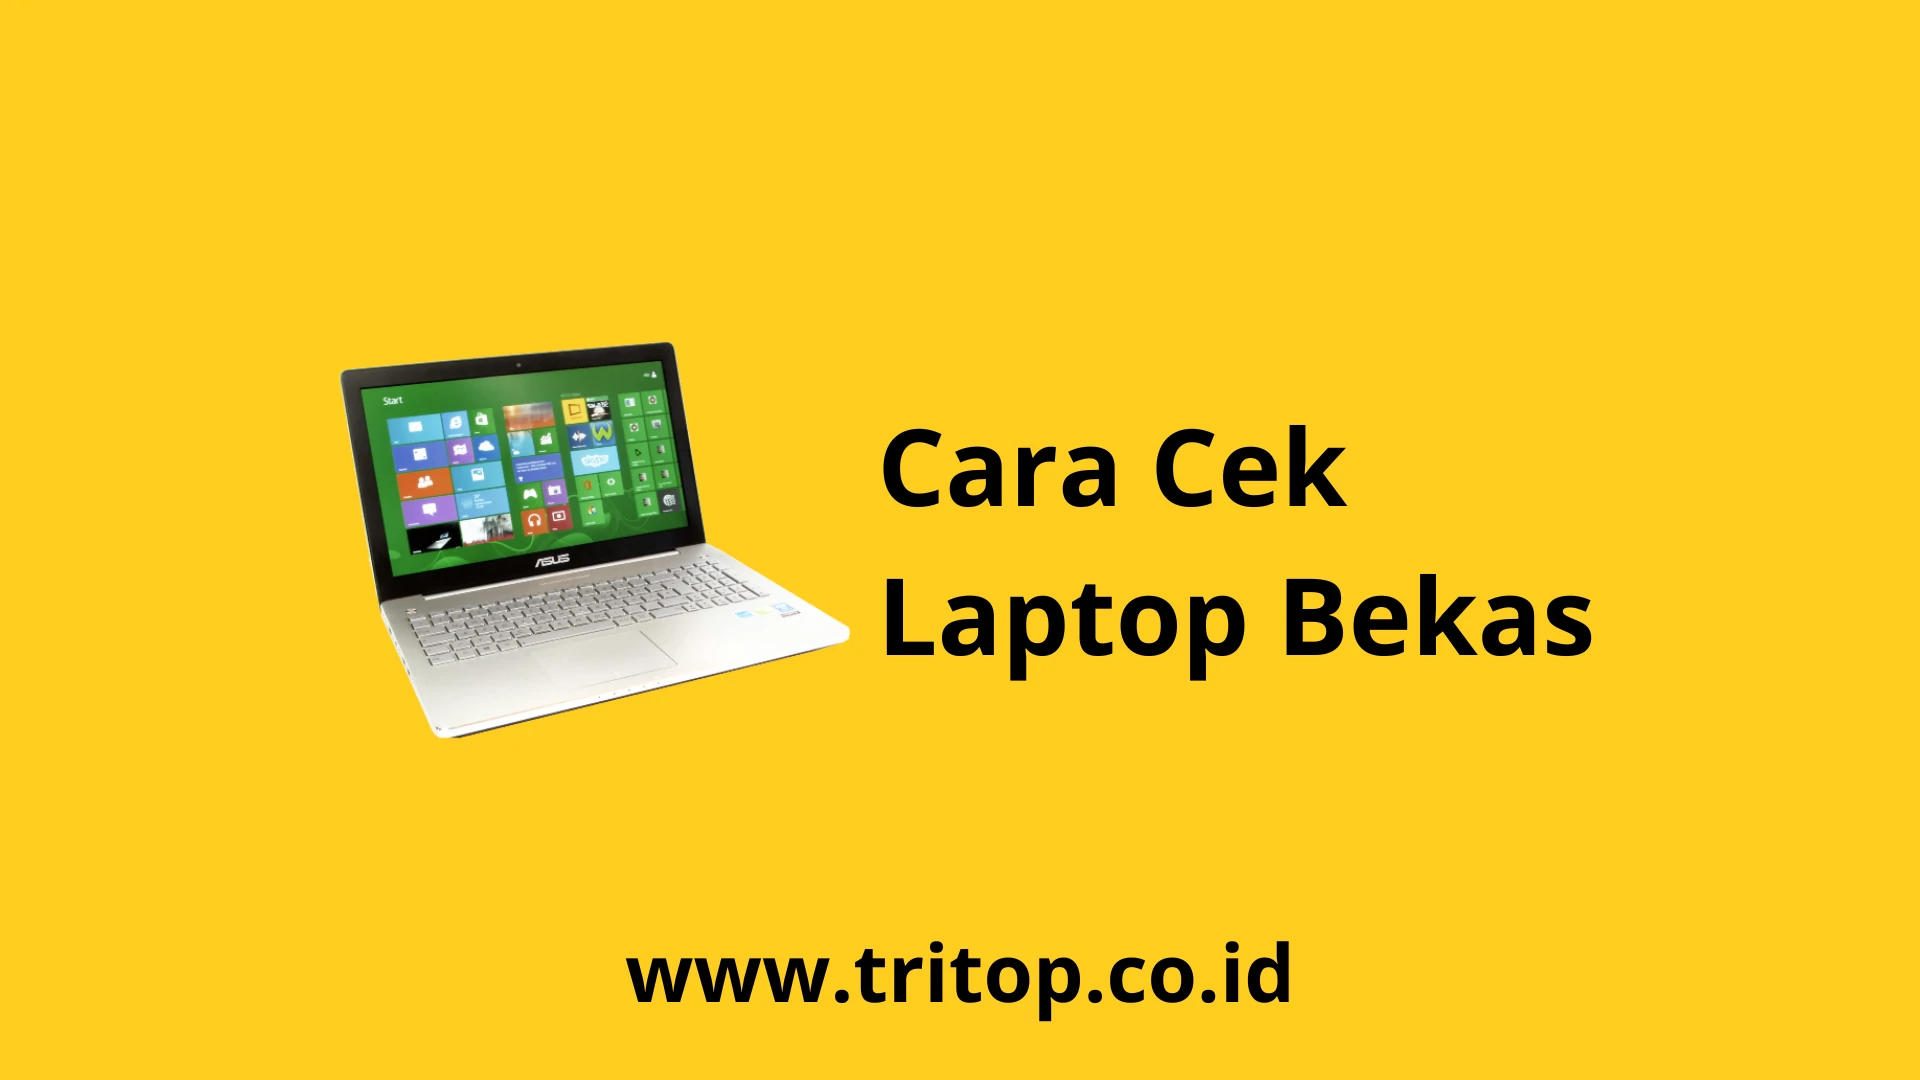 Cek Laptop Bekas Tritop.co.id